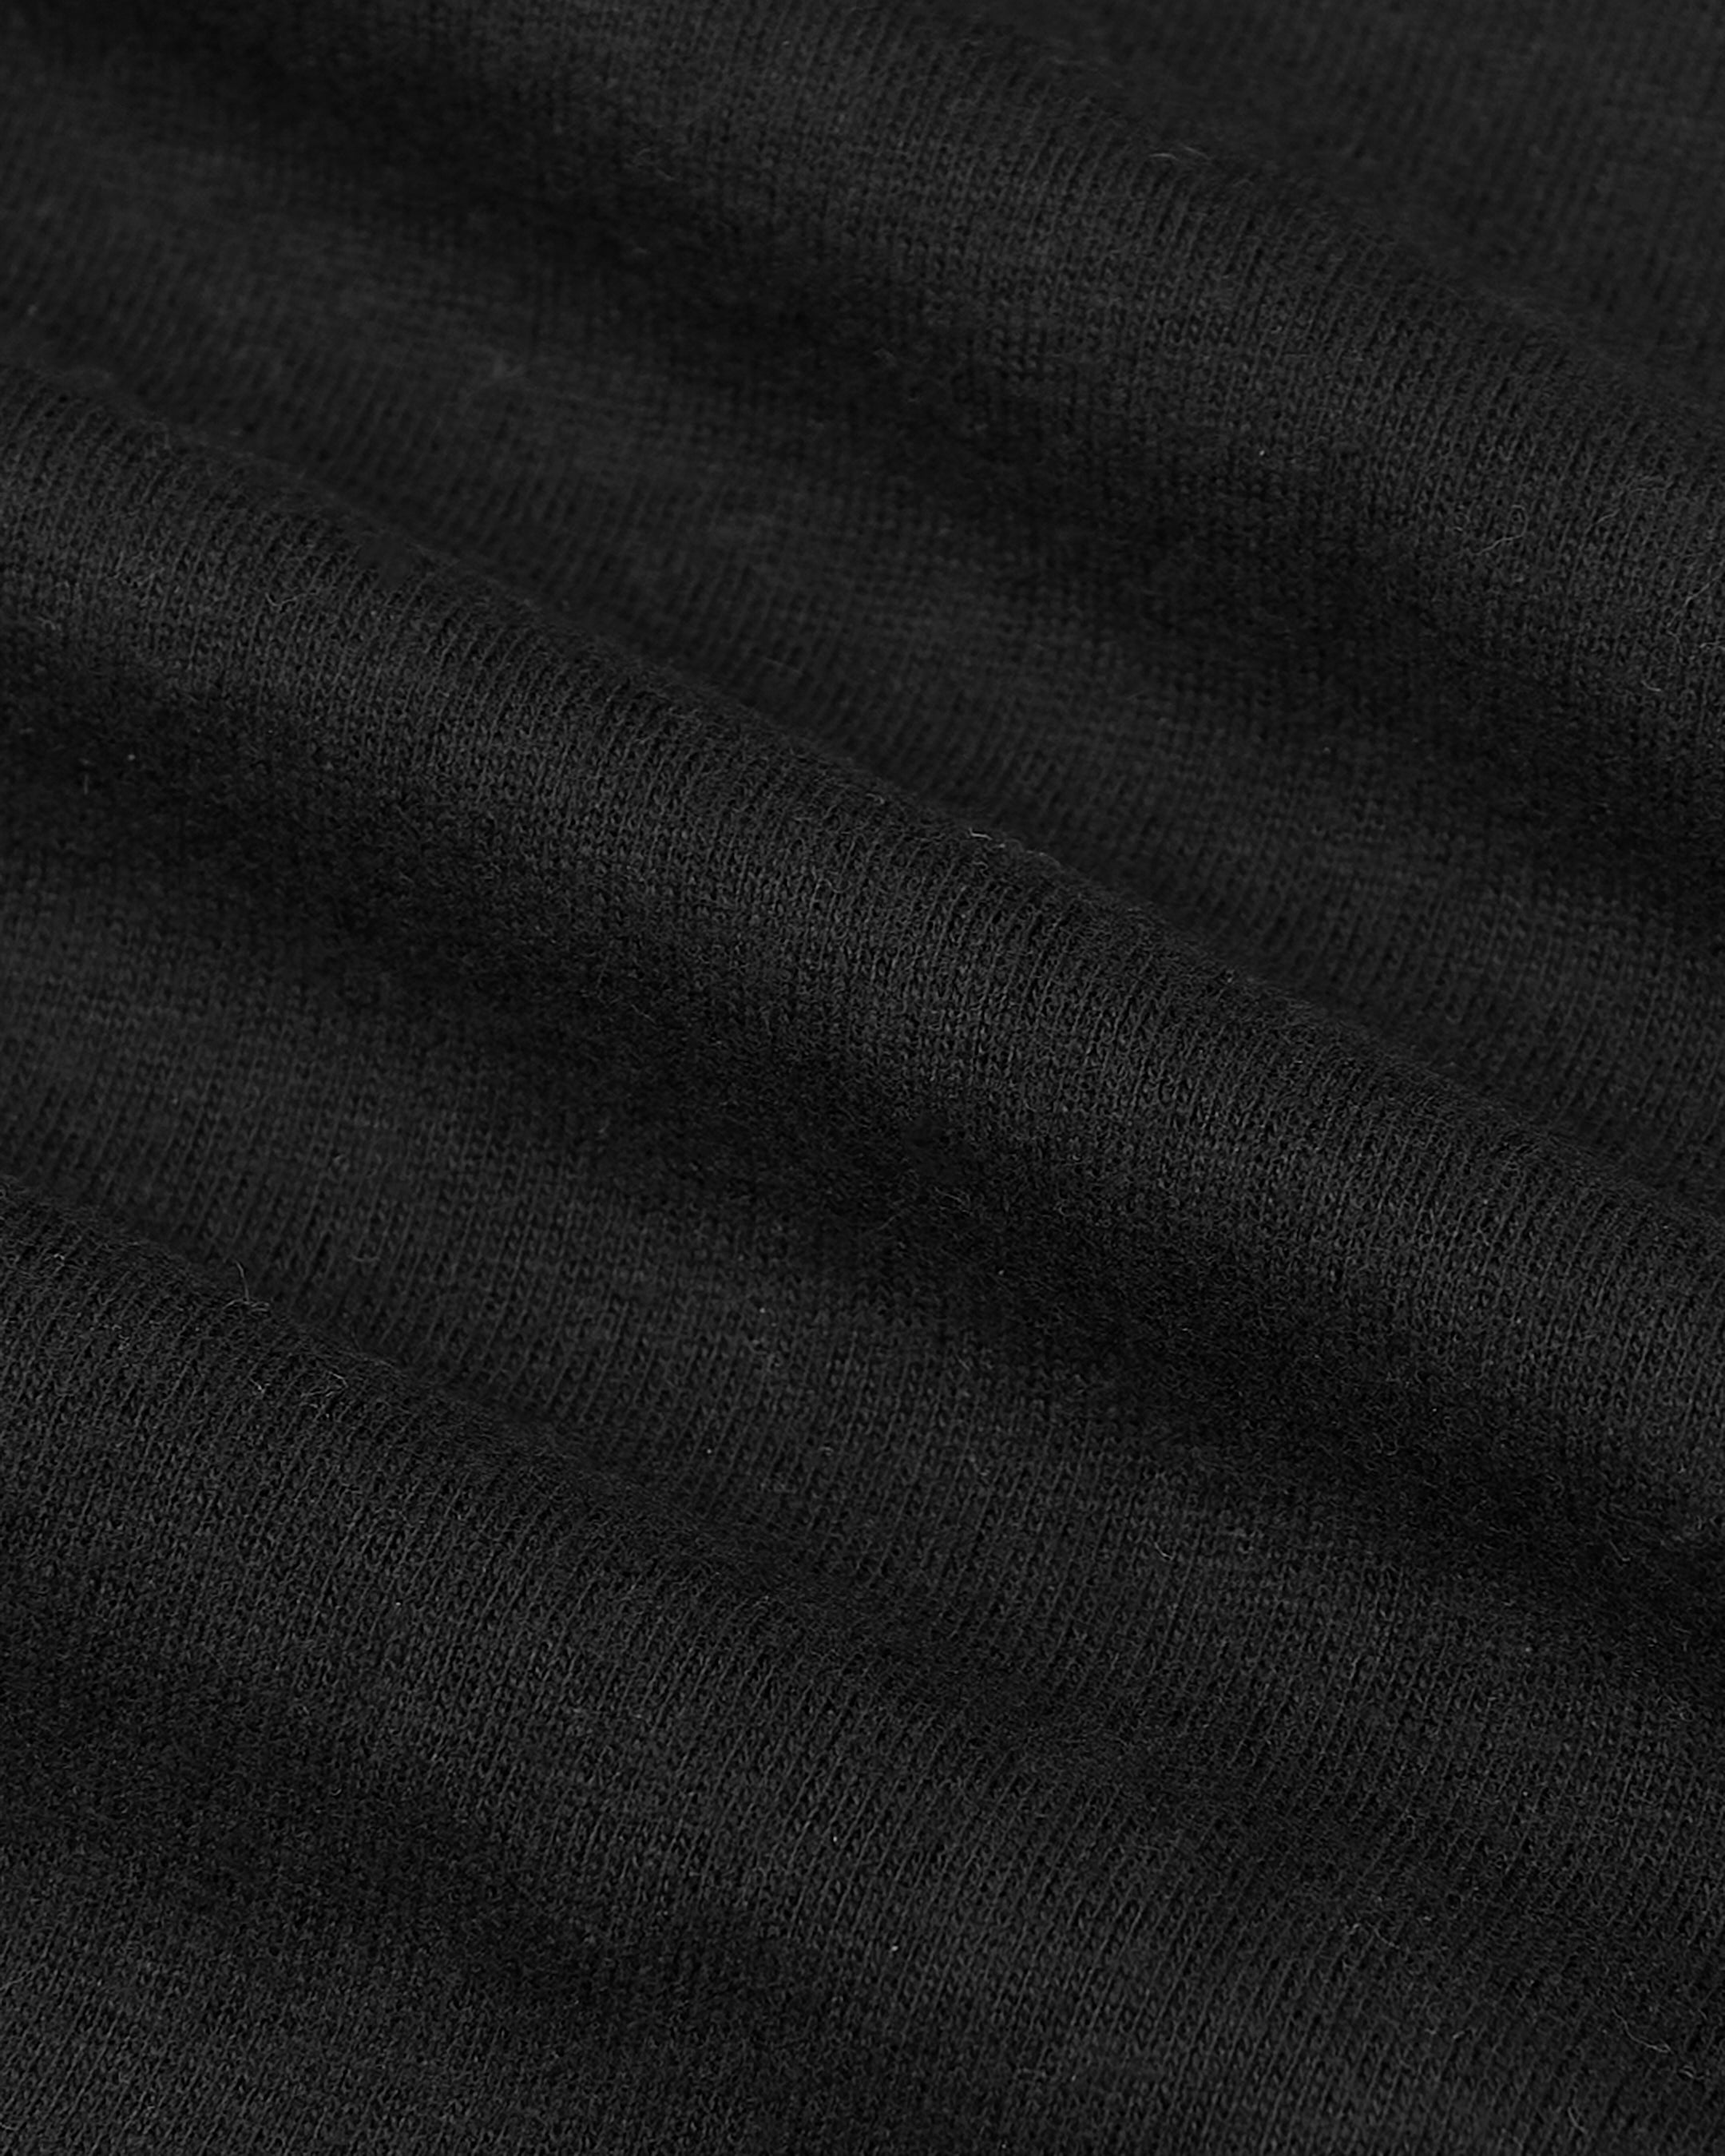 True Classic All Black 6-Pack Crew Neck T-shirts | Cotton Blend | Athletic Cut | 2XL / 2XL